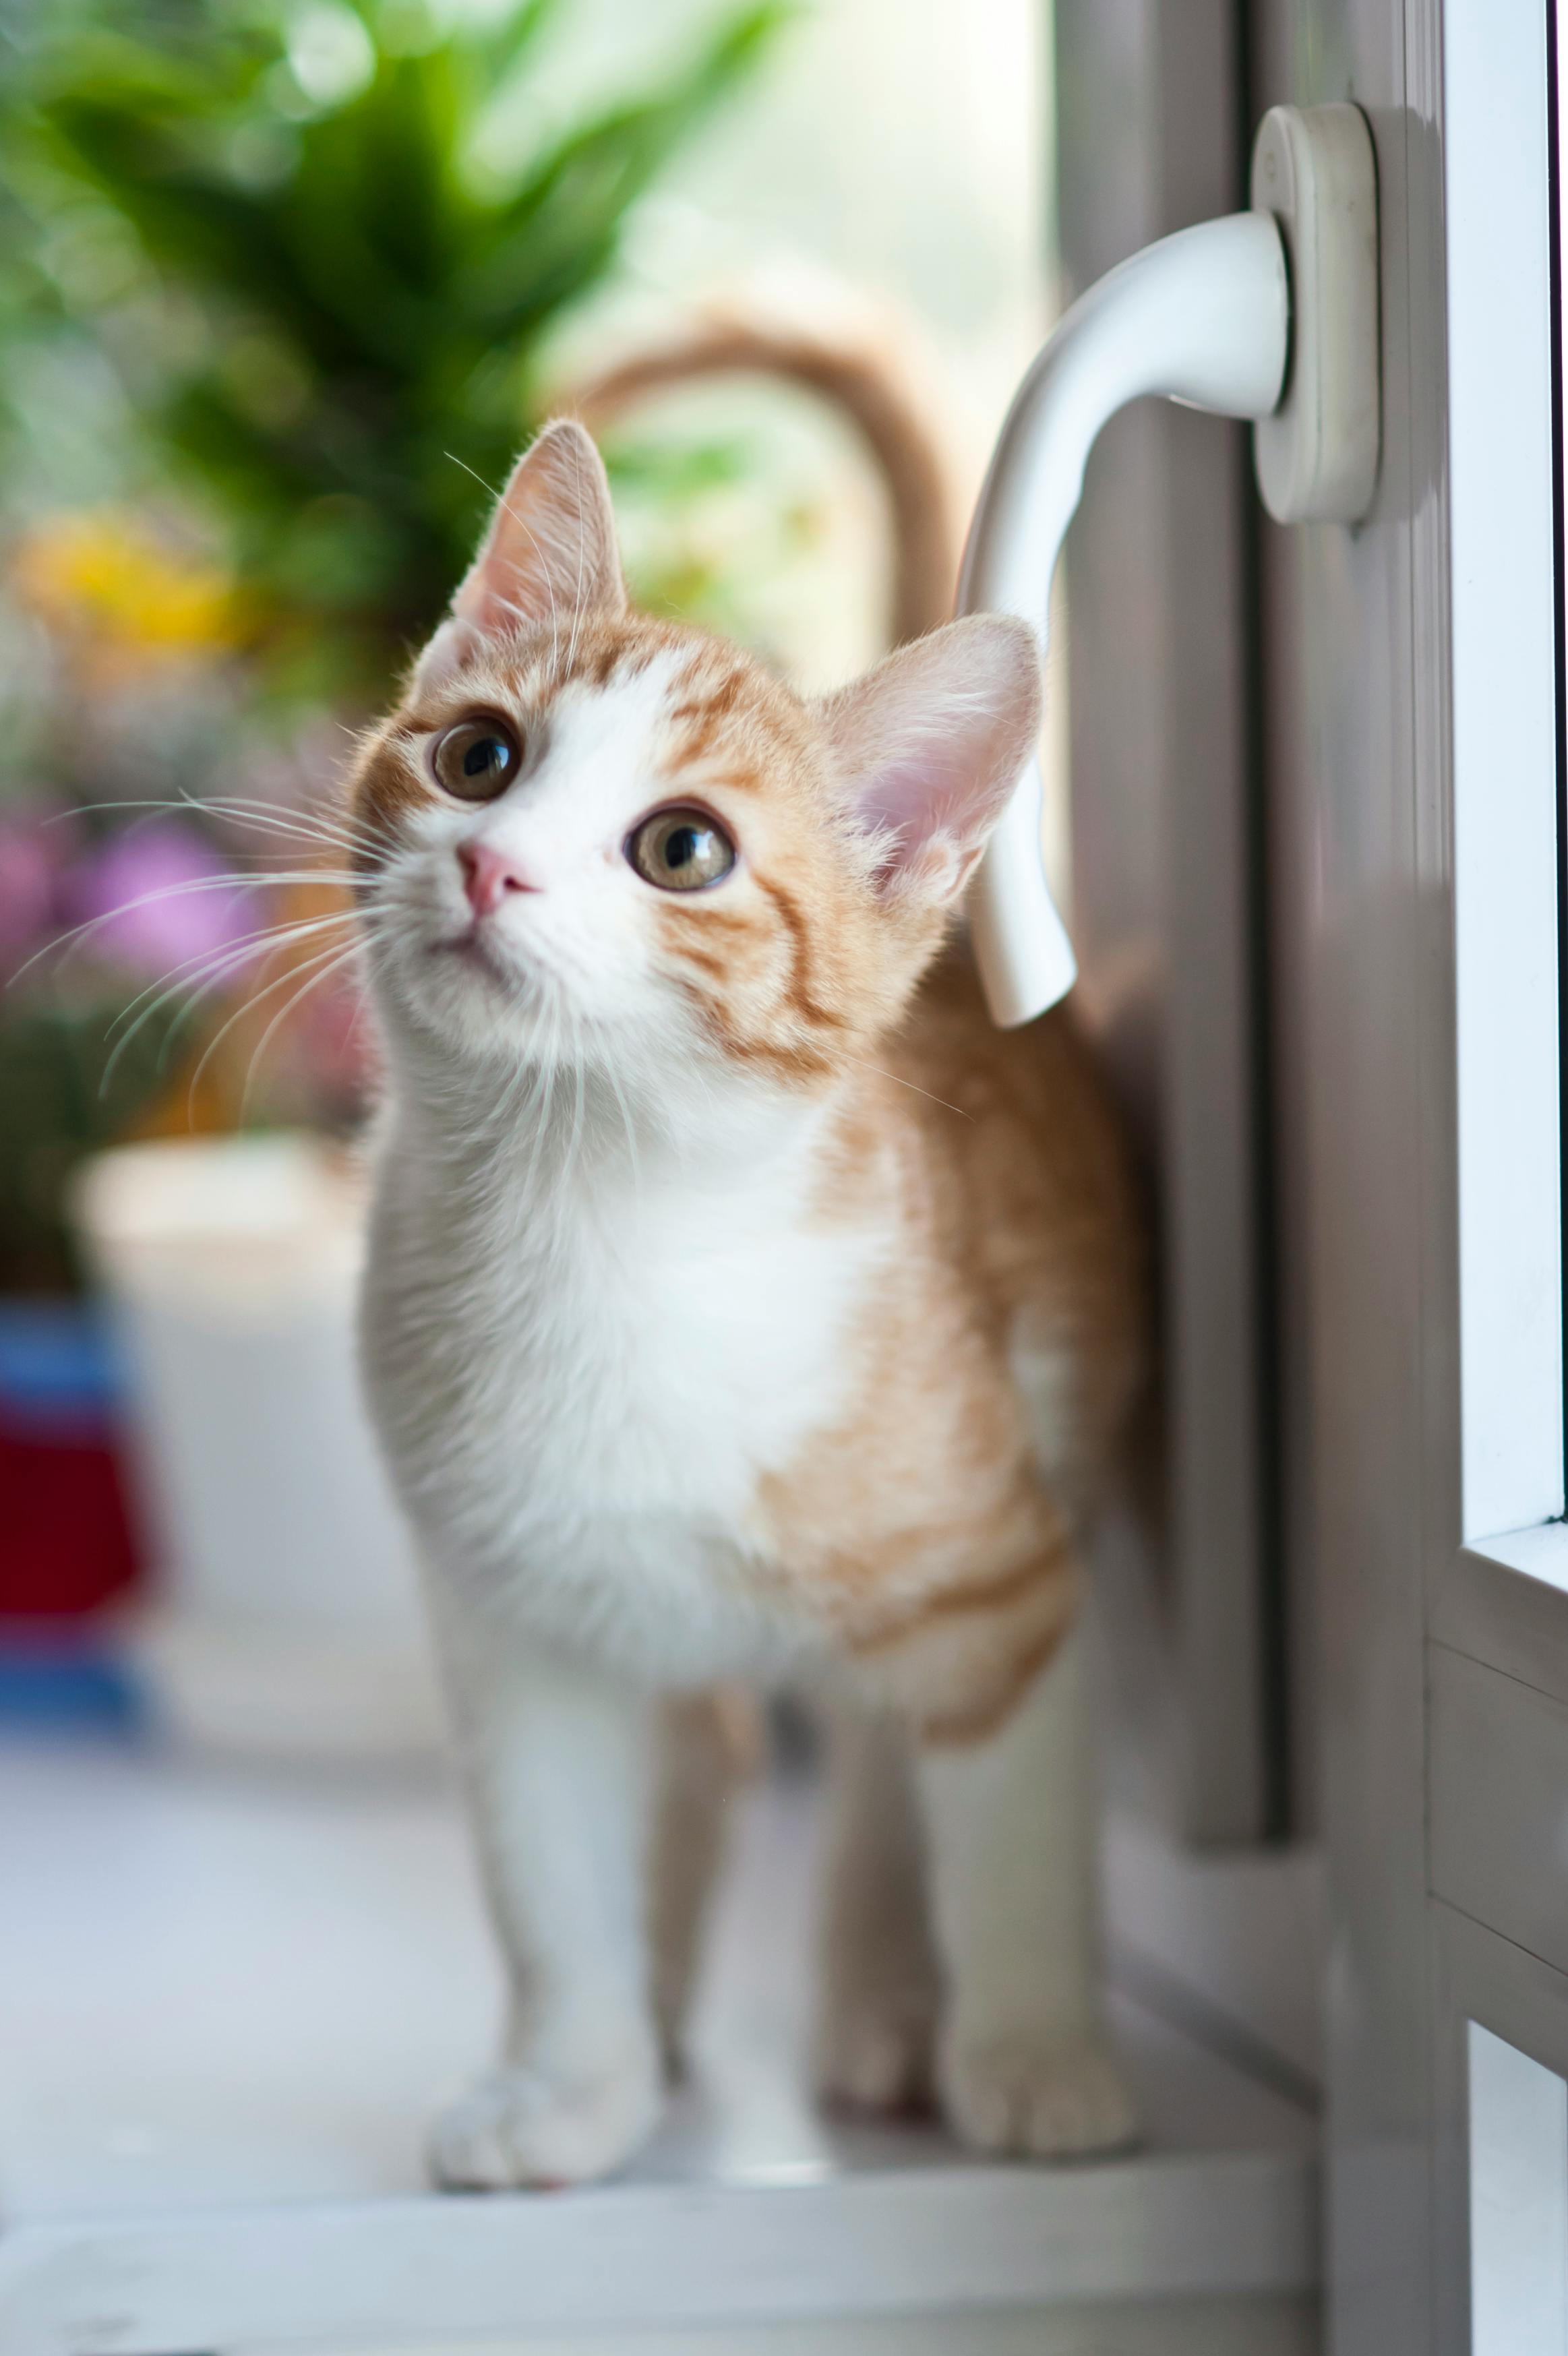 521,547 Cute Cat Kitten Stock Photos - Free & Royalty-Free Stock